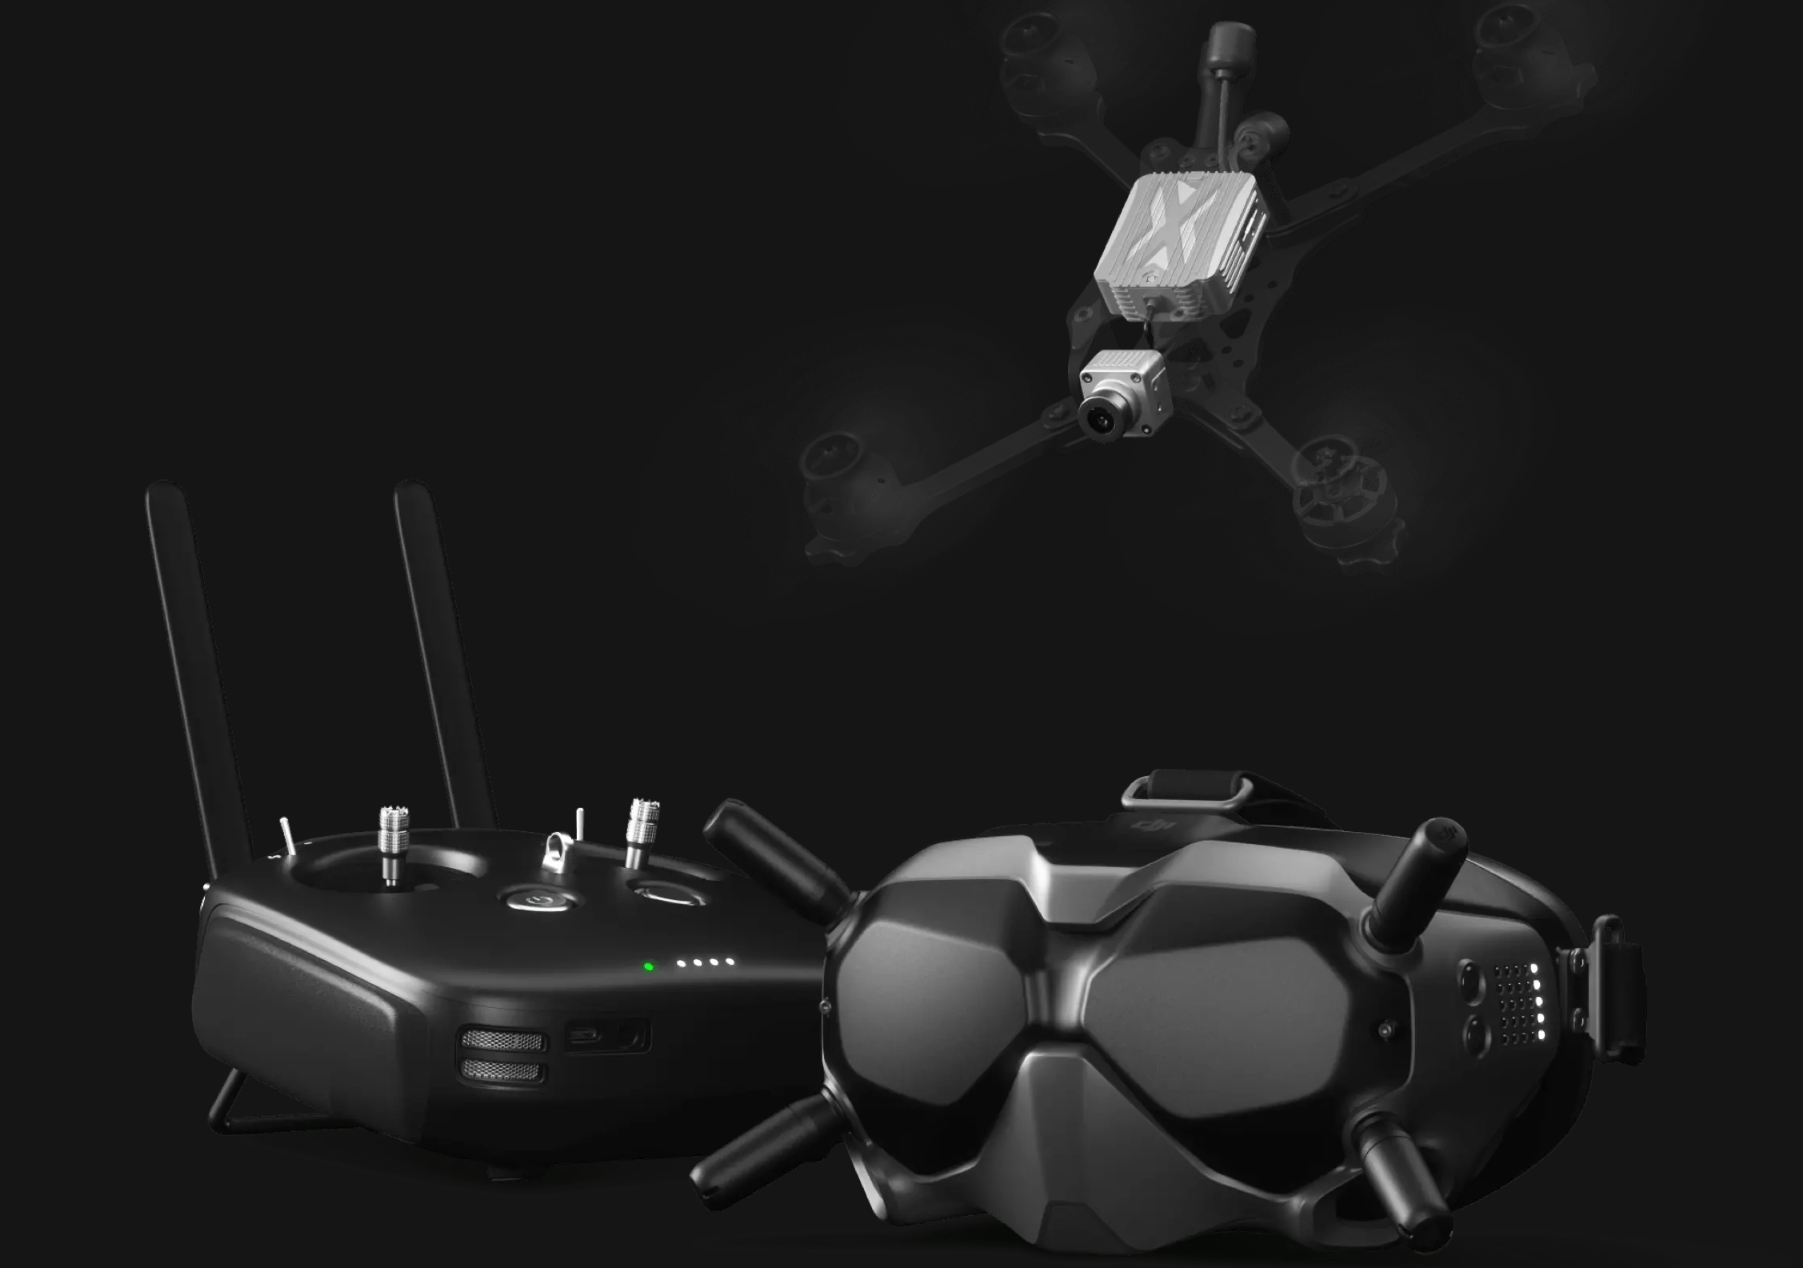 dji drone black friday